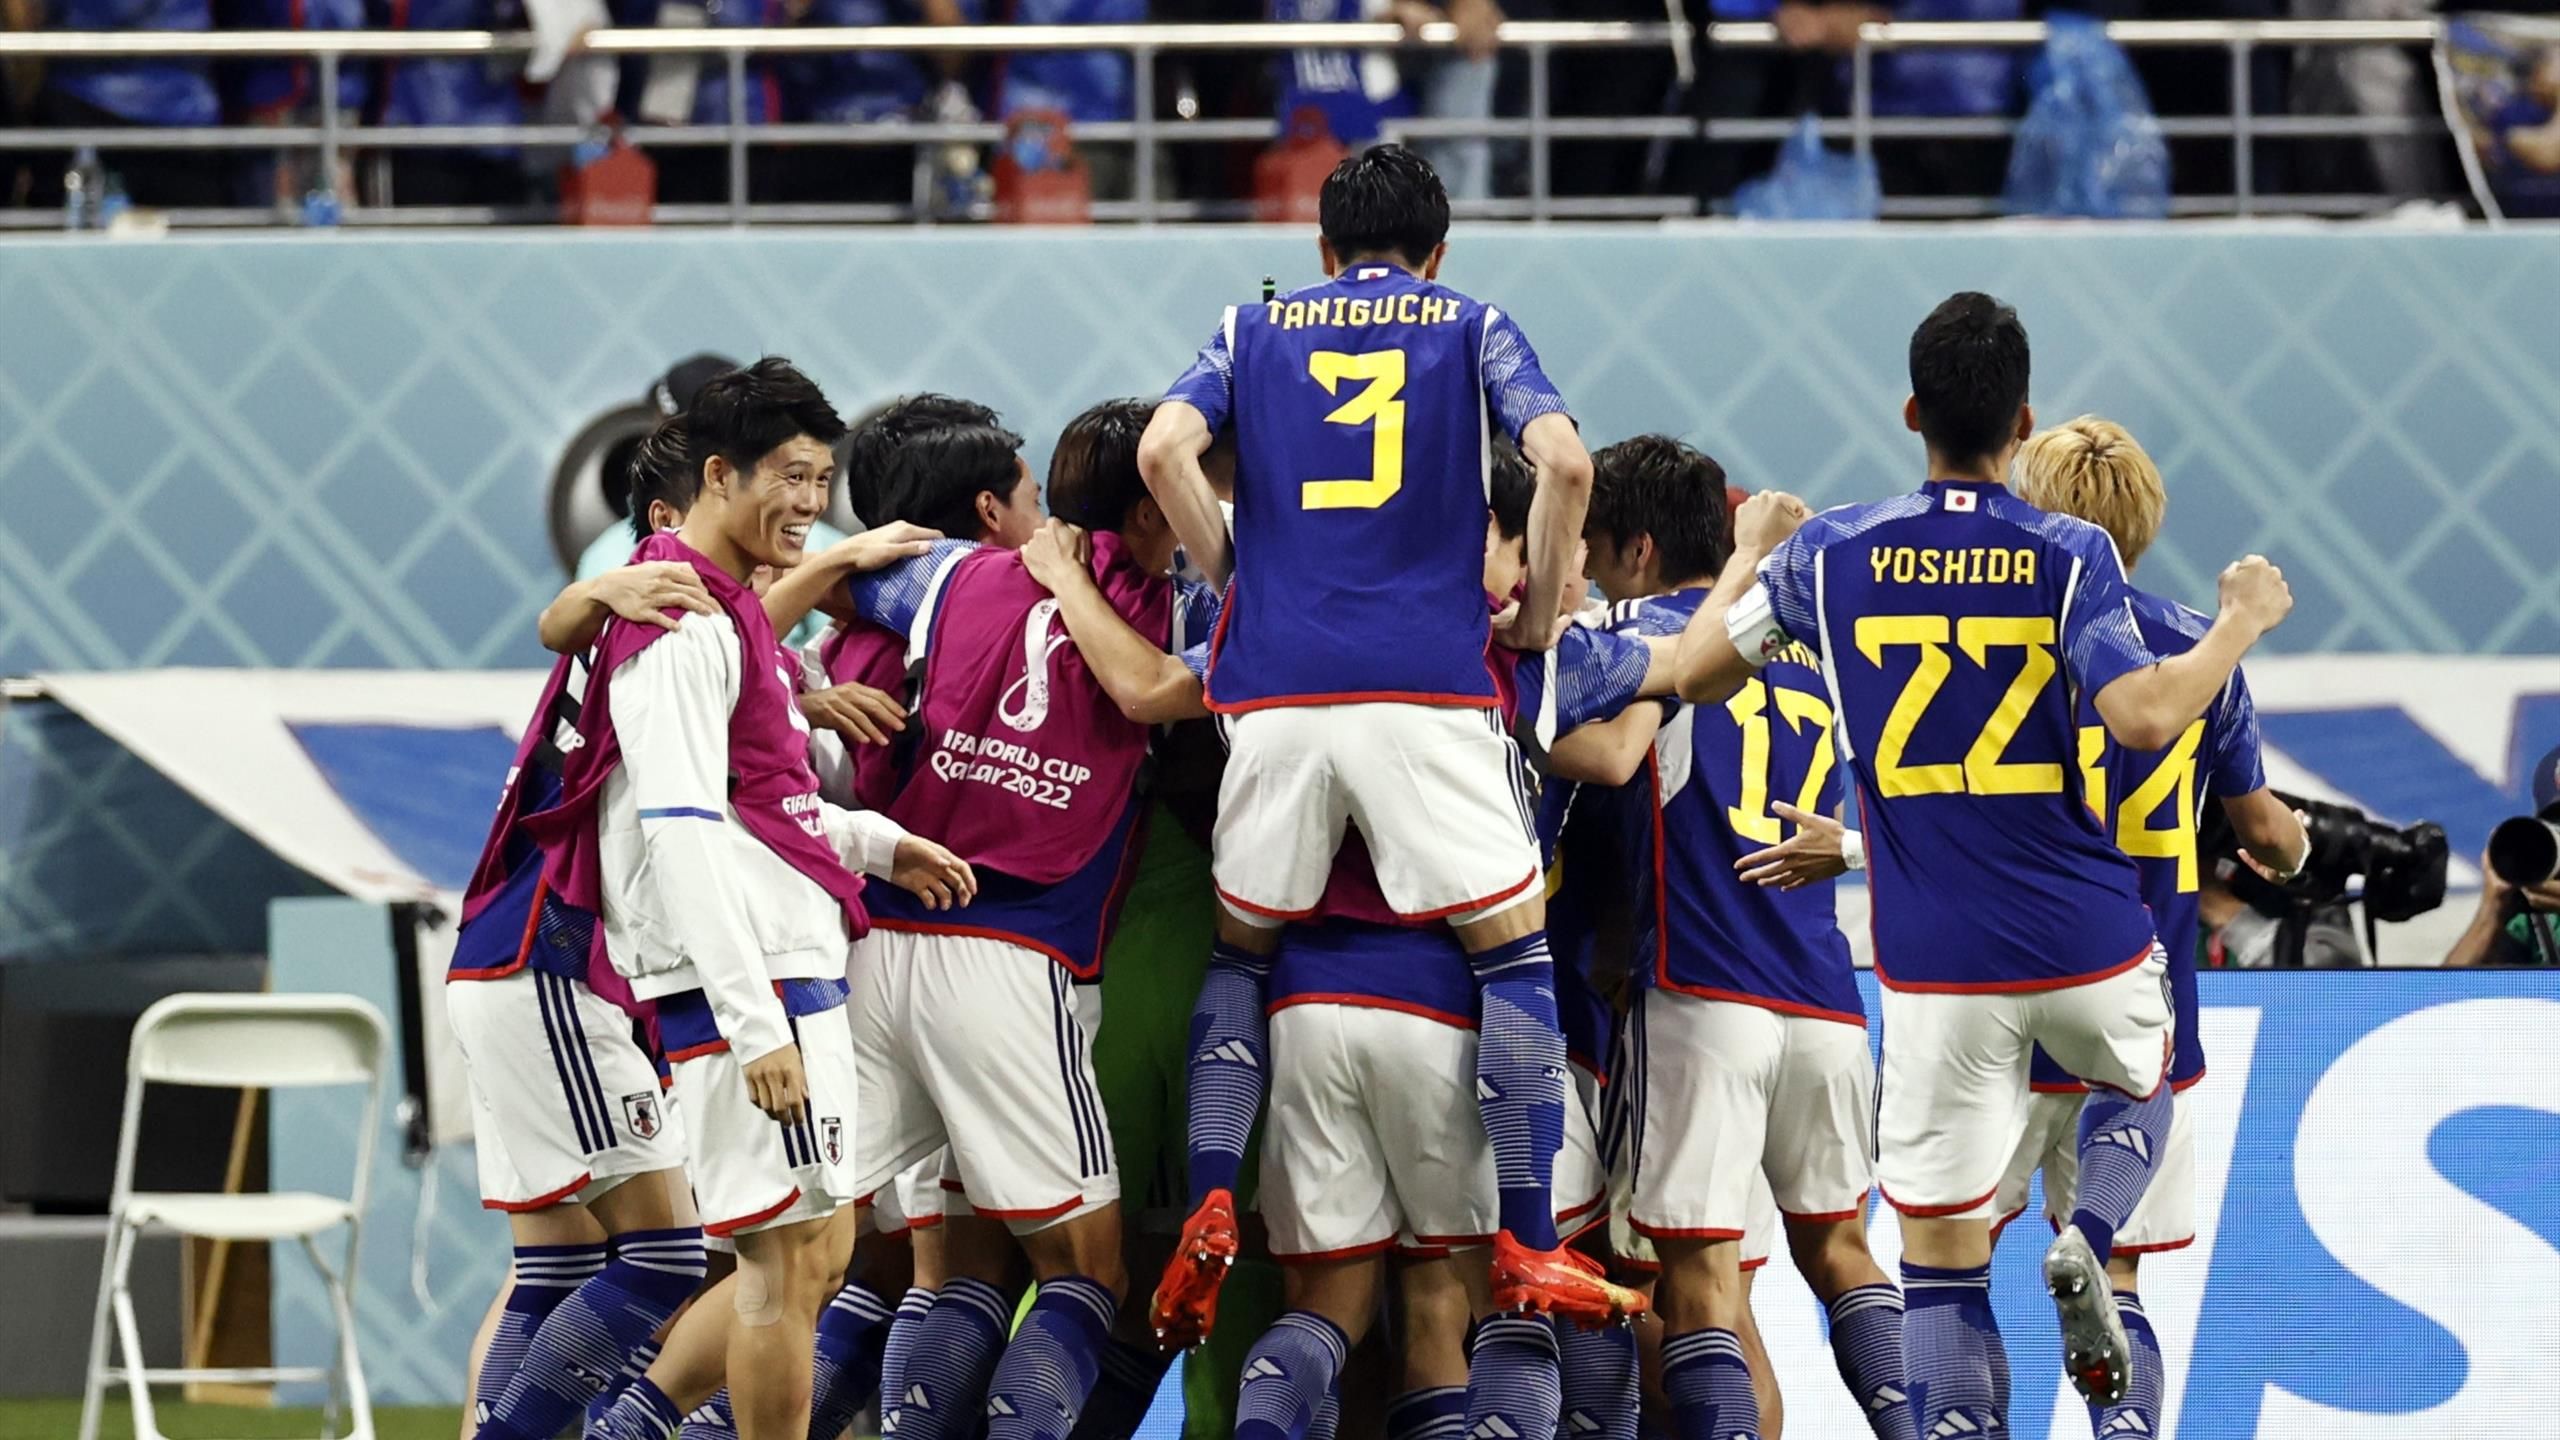 Germany 1-2 Japan: Player ratings as late Asano winner seals World